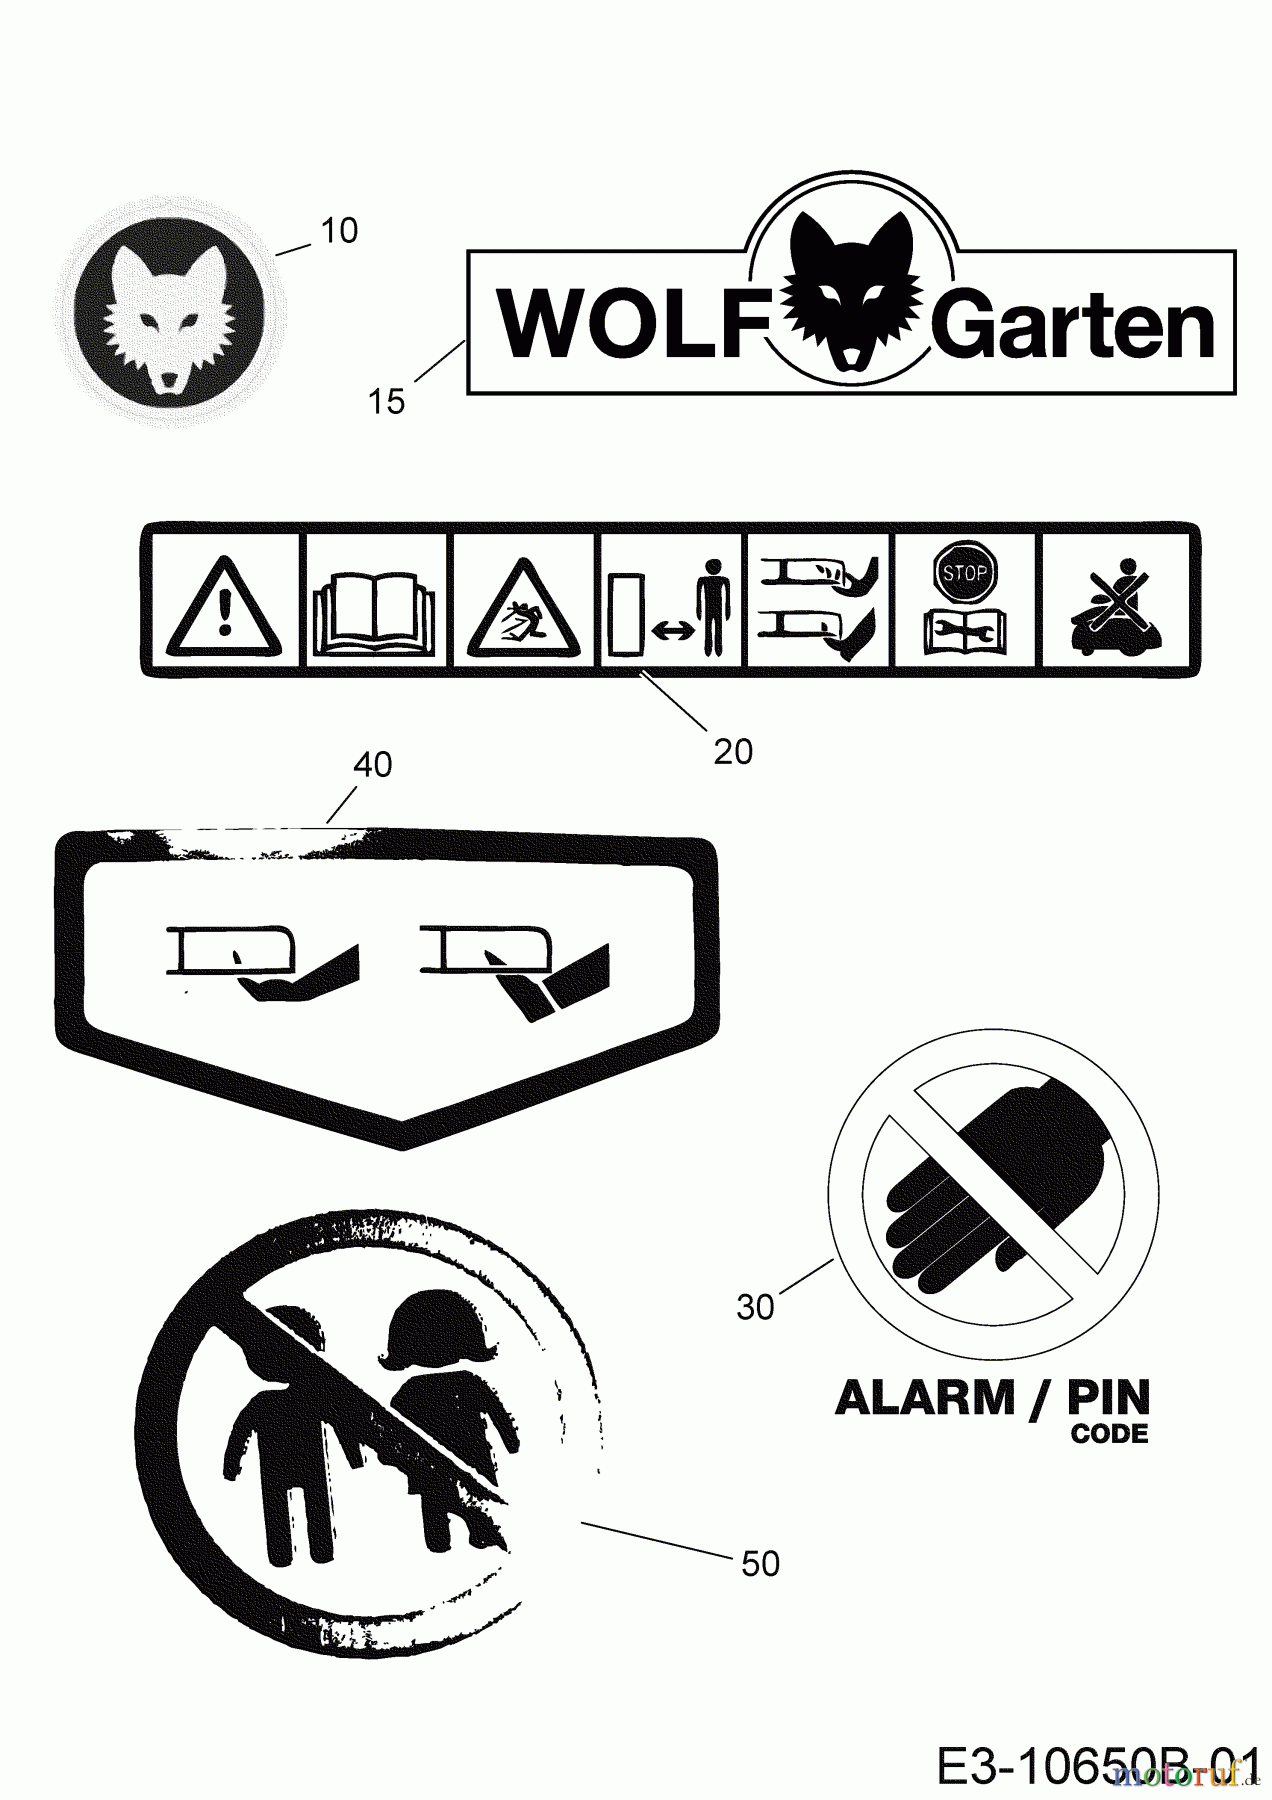  Wolf-Garten Robotic lawn mower Loopo S500 22AXGA-A650 (2020) Labels